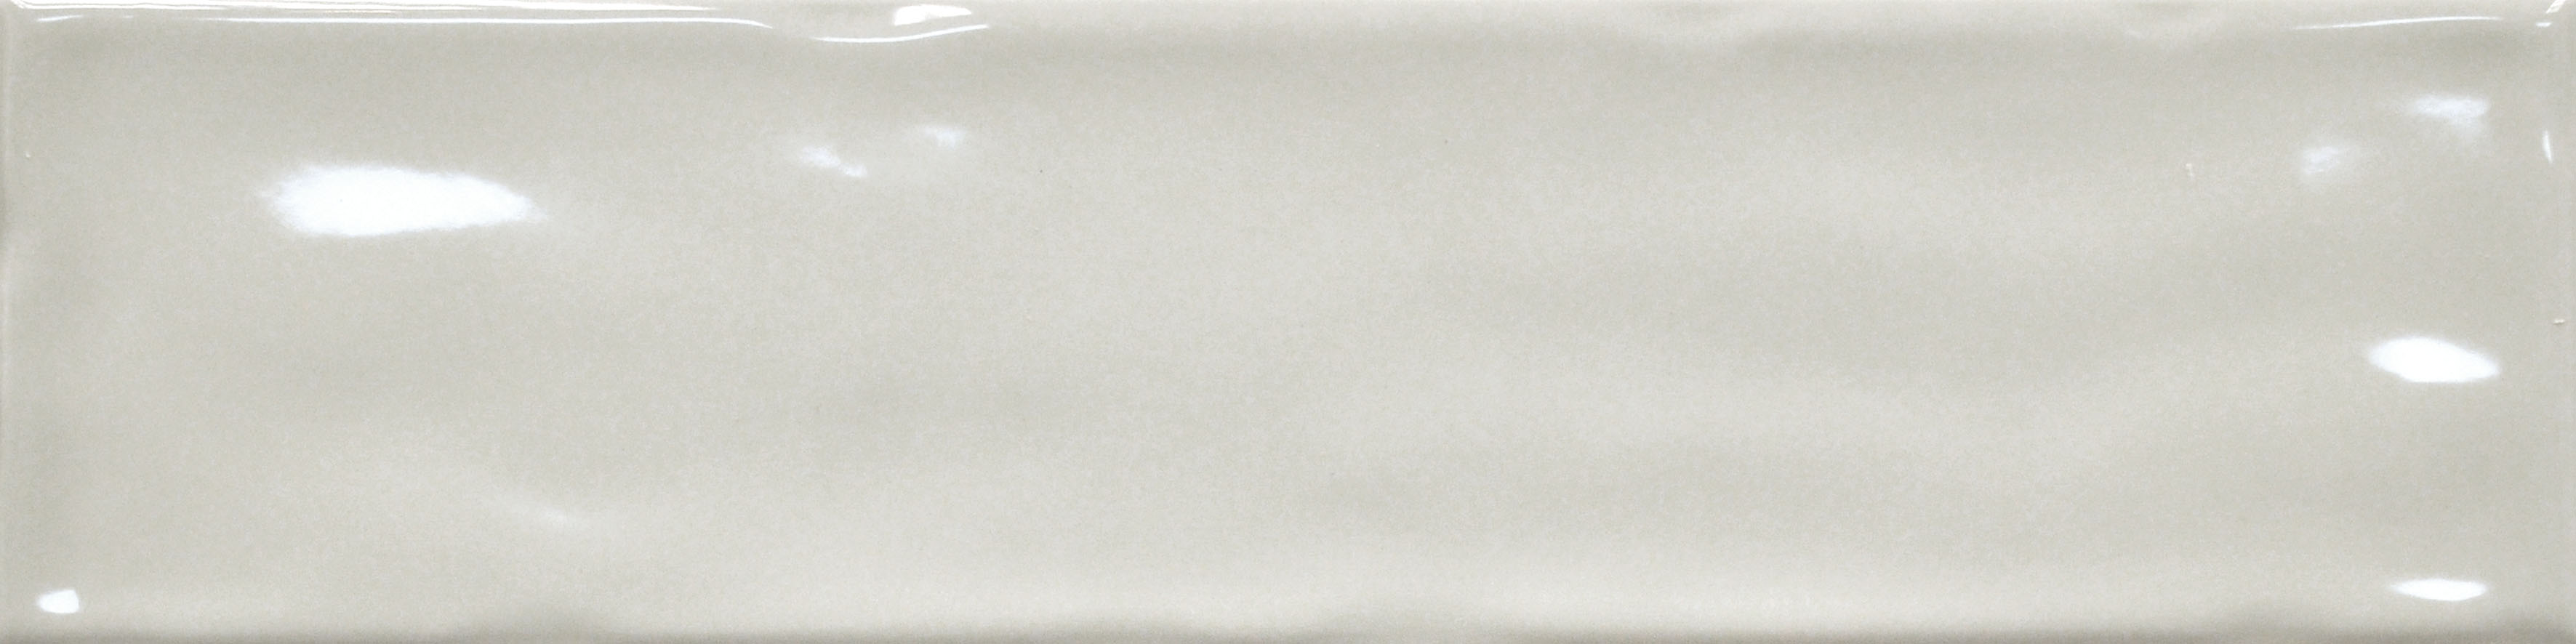 Catalea Gres Tälberg Metrofliesen Grau glänzend 7,5x30 cm 